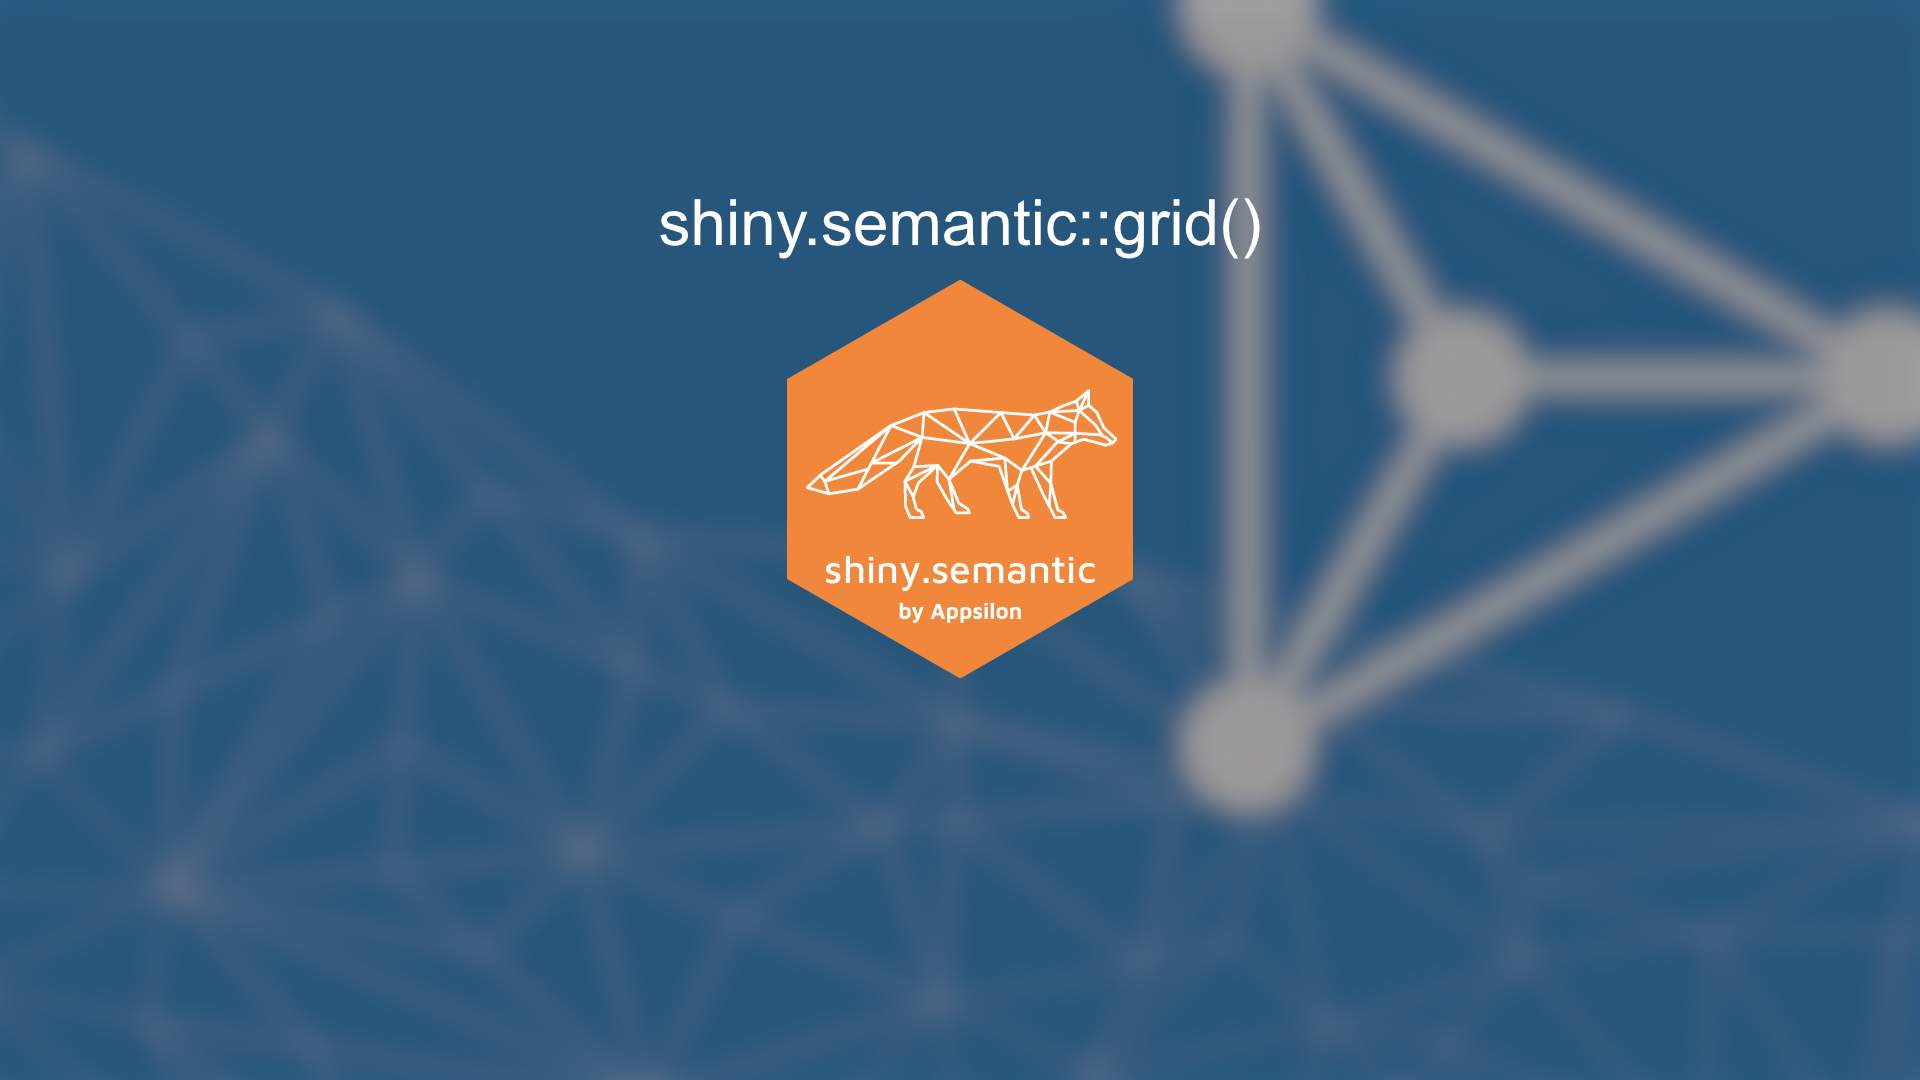 Shiny semantic grid article thumbnail